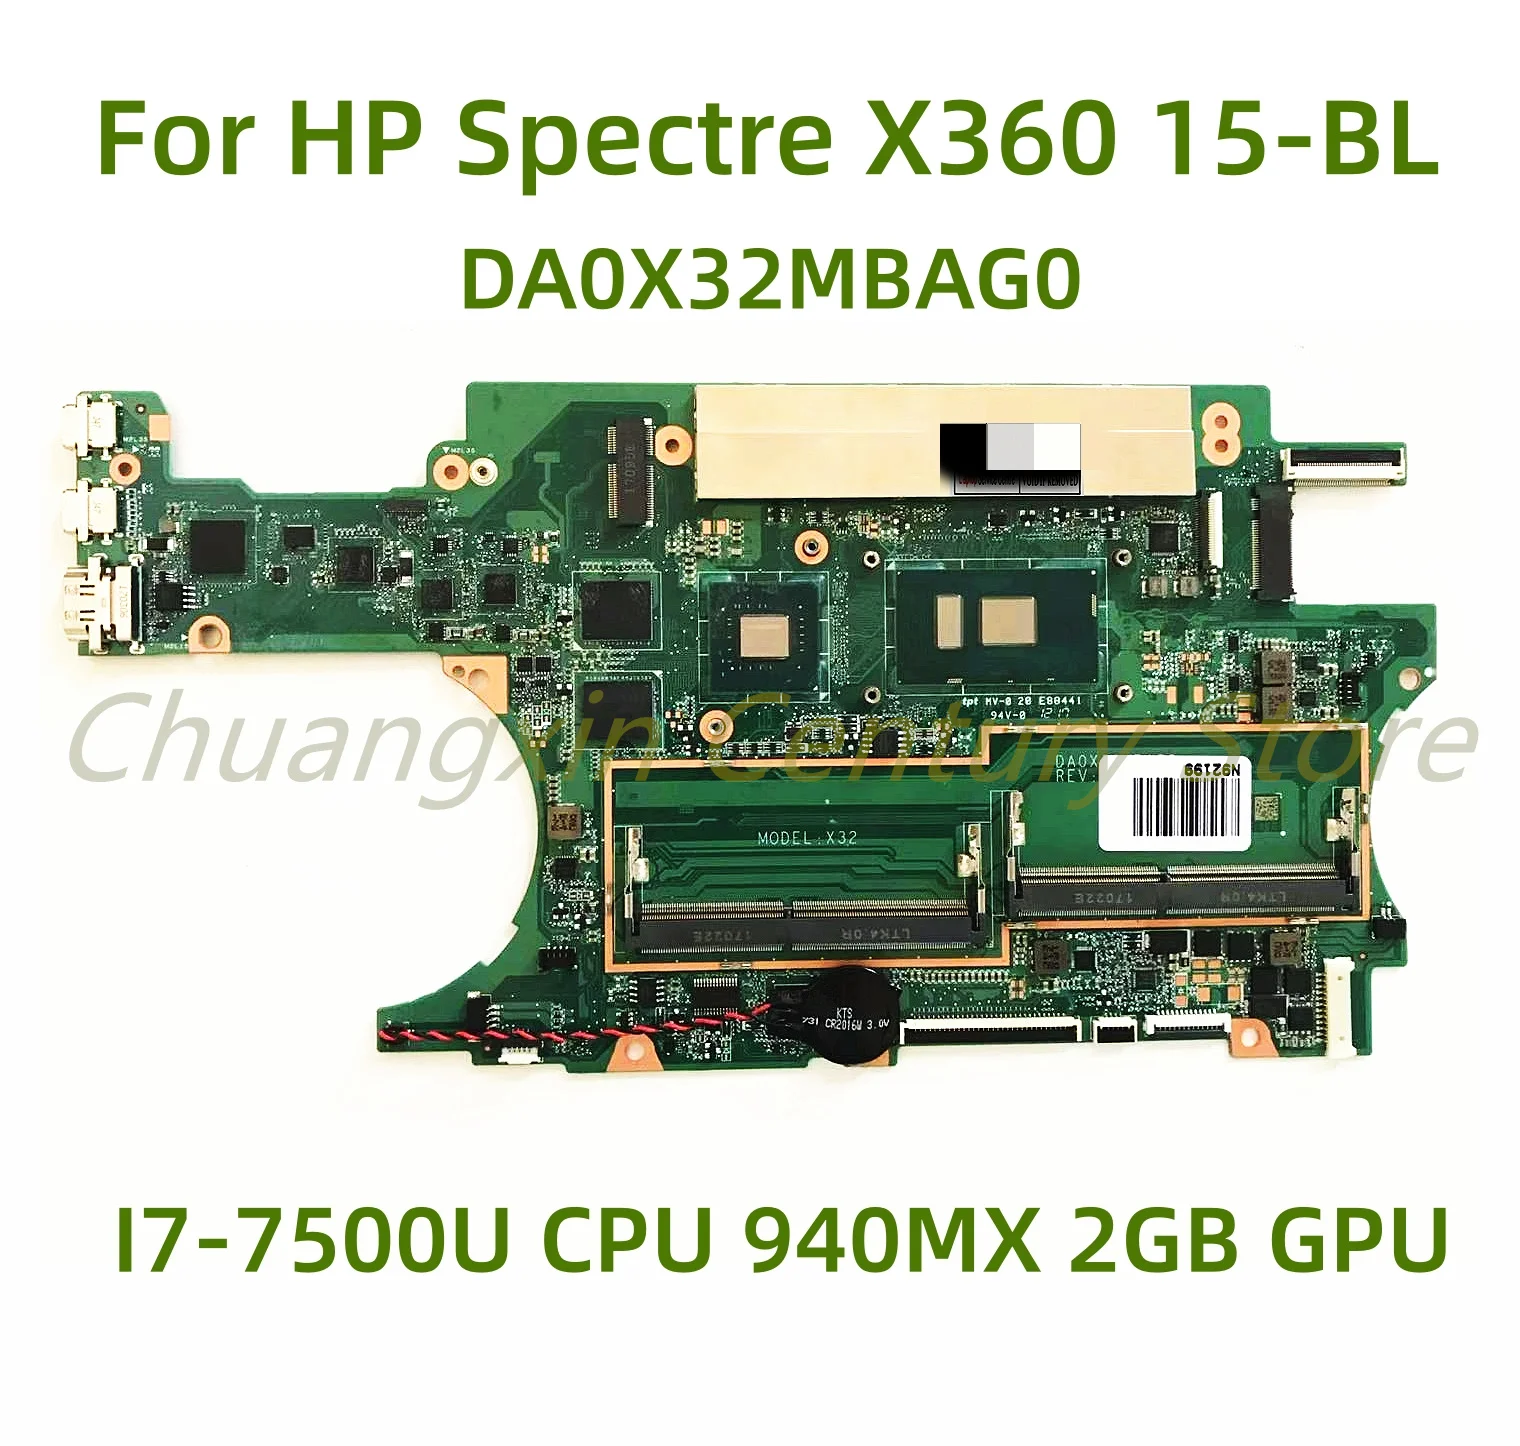 Подходит для ноутбука HP Spectre X360 15-BL материнская плата DA0X32MBAG0 с процессором I7-7500U 940MX 2GB GPU 100% Протестирована Полная Работа